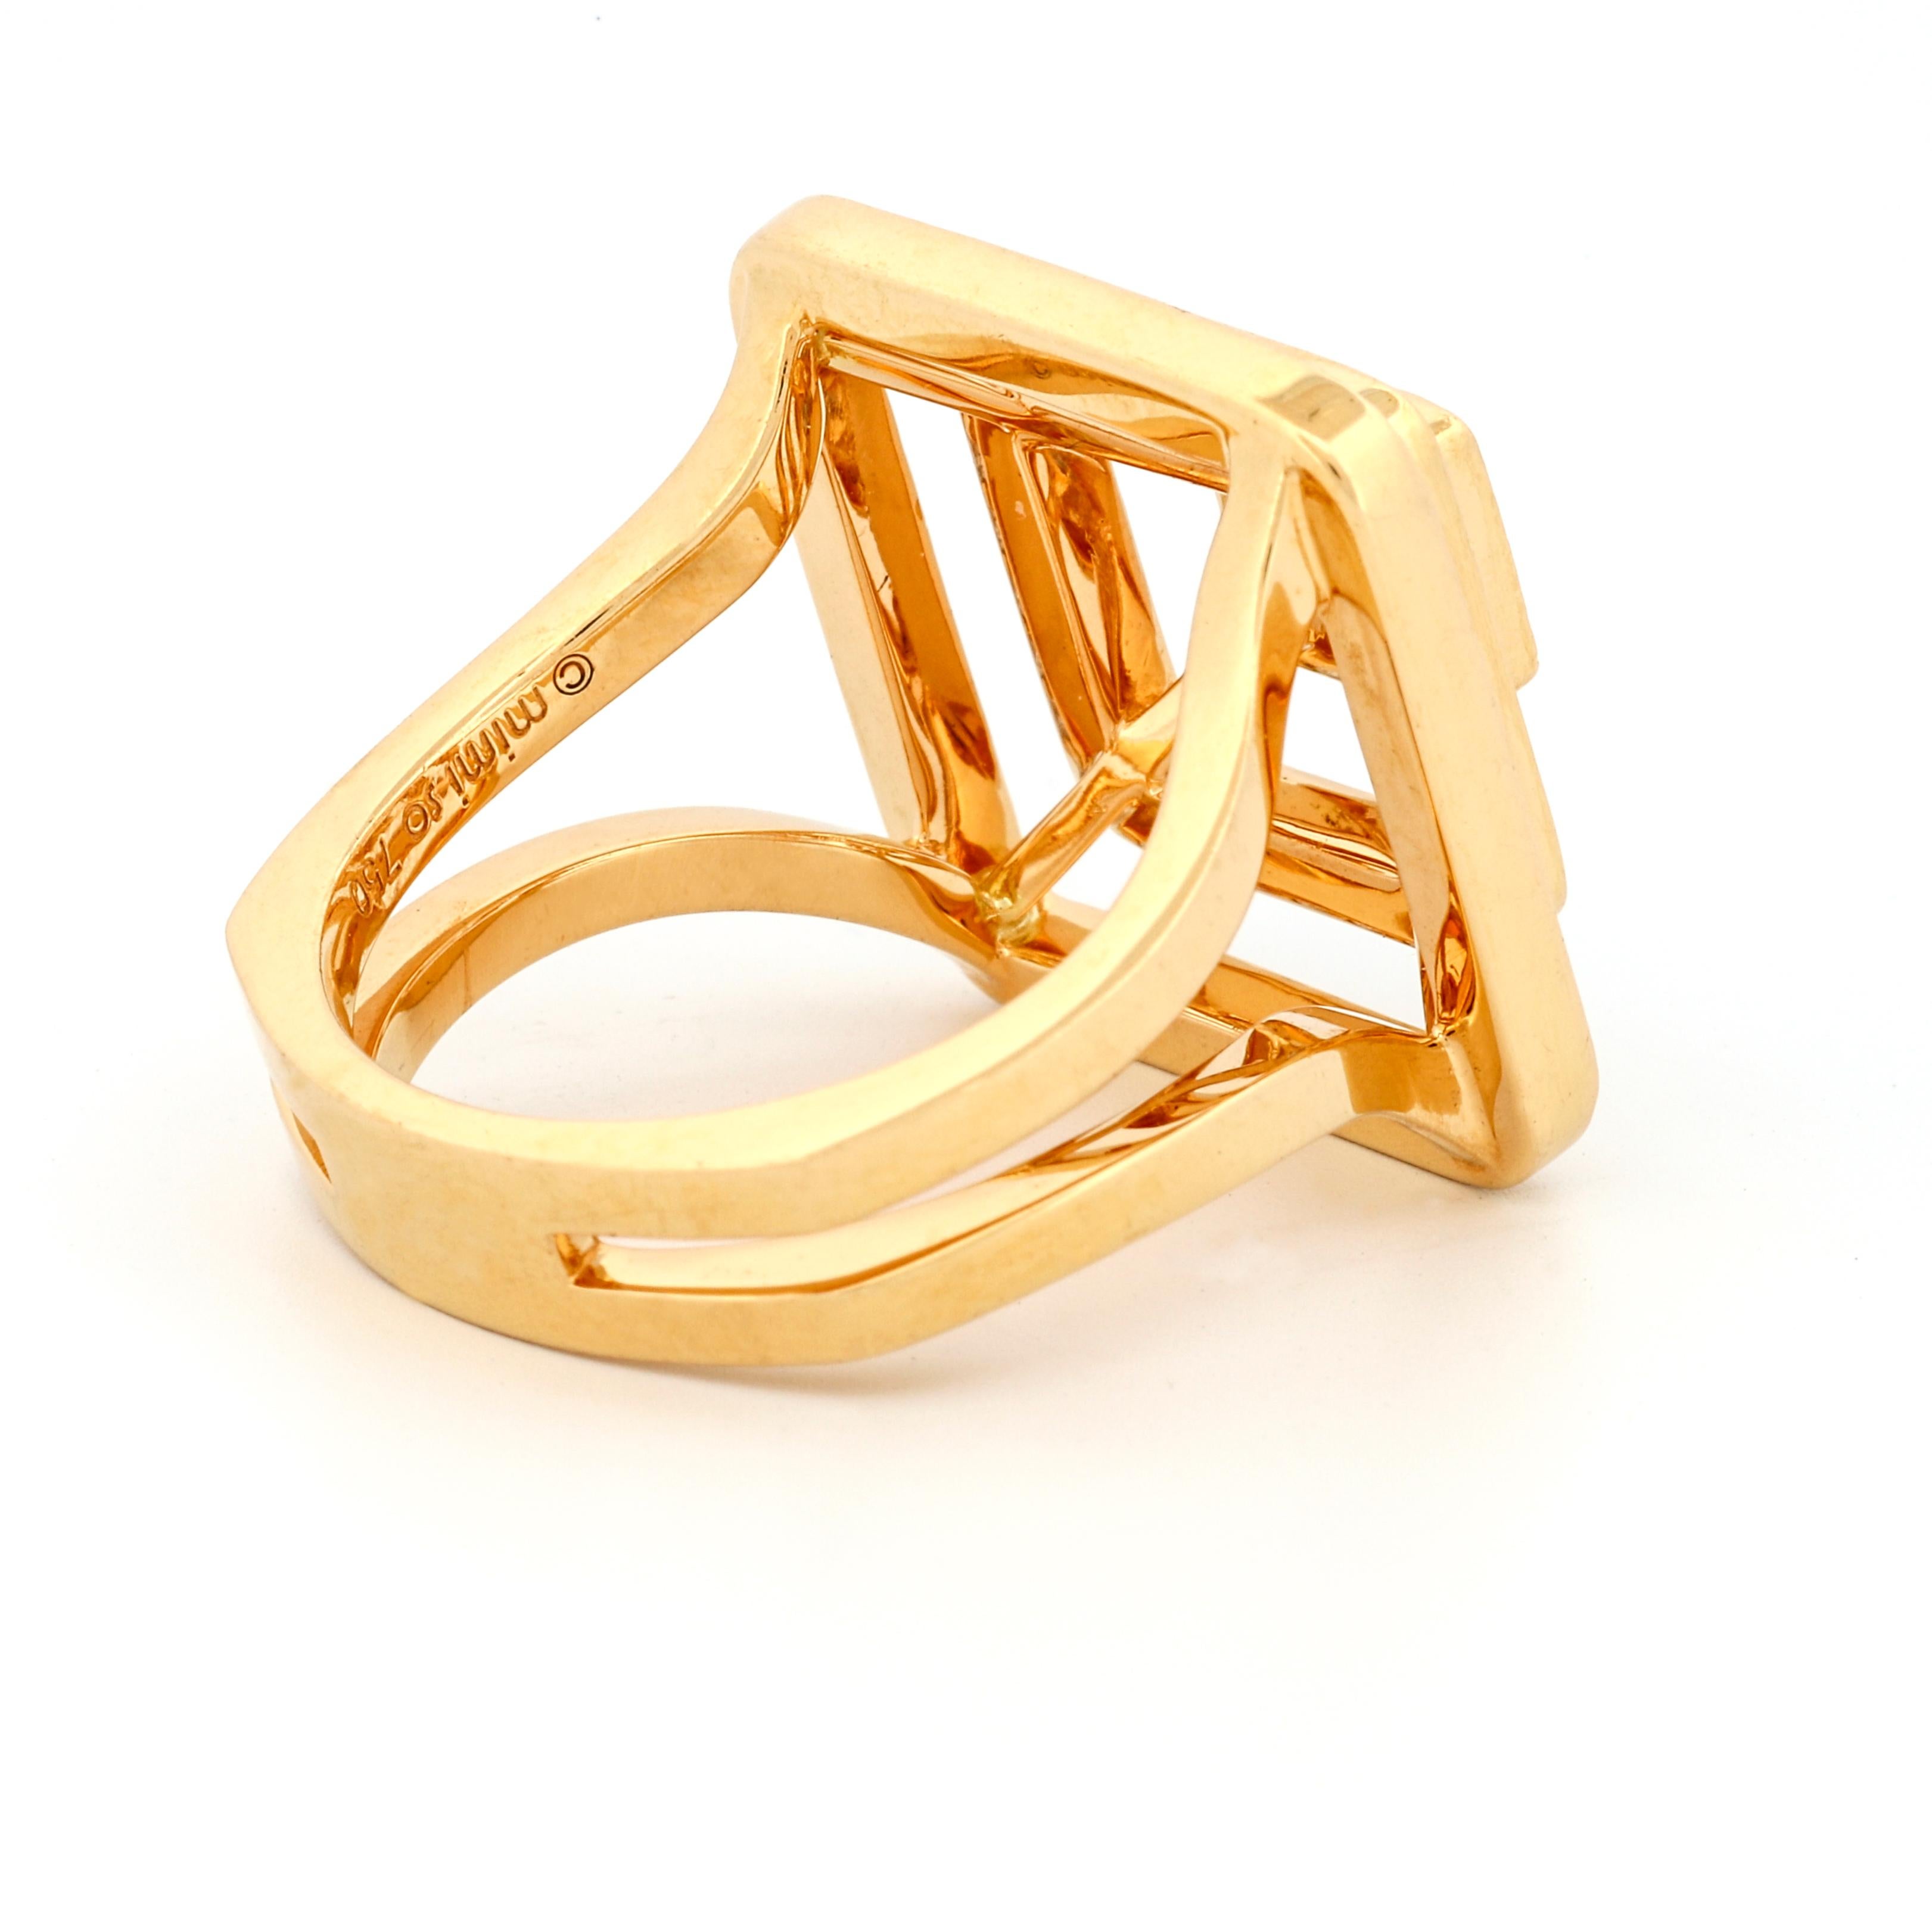 Taille princesse Mimi So Piece Pyramid Diamond Ring en or jaune 18 carats, taille 6,5 en vente